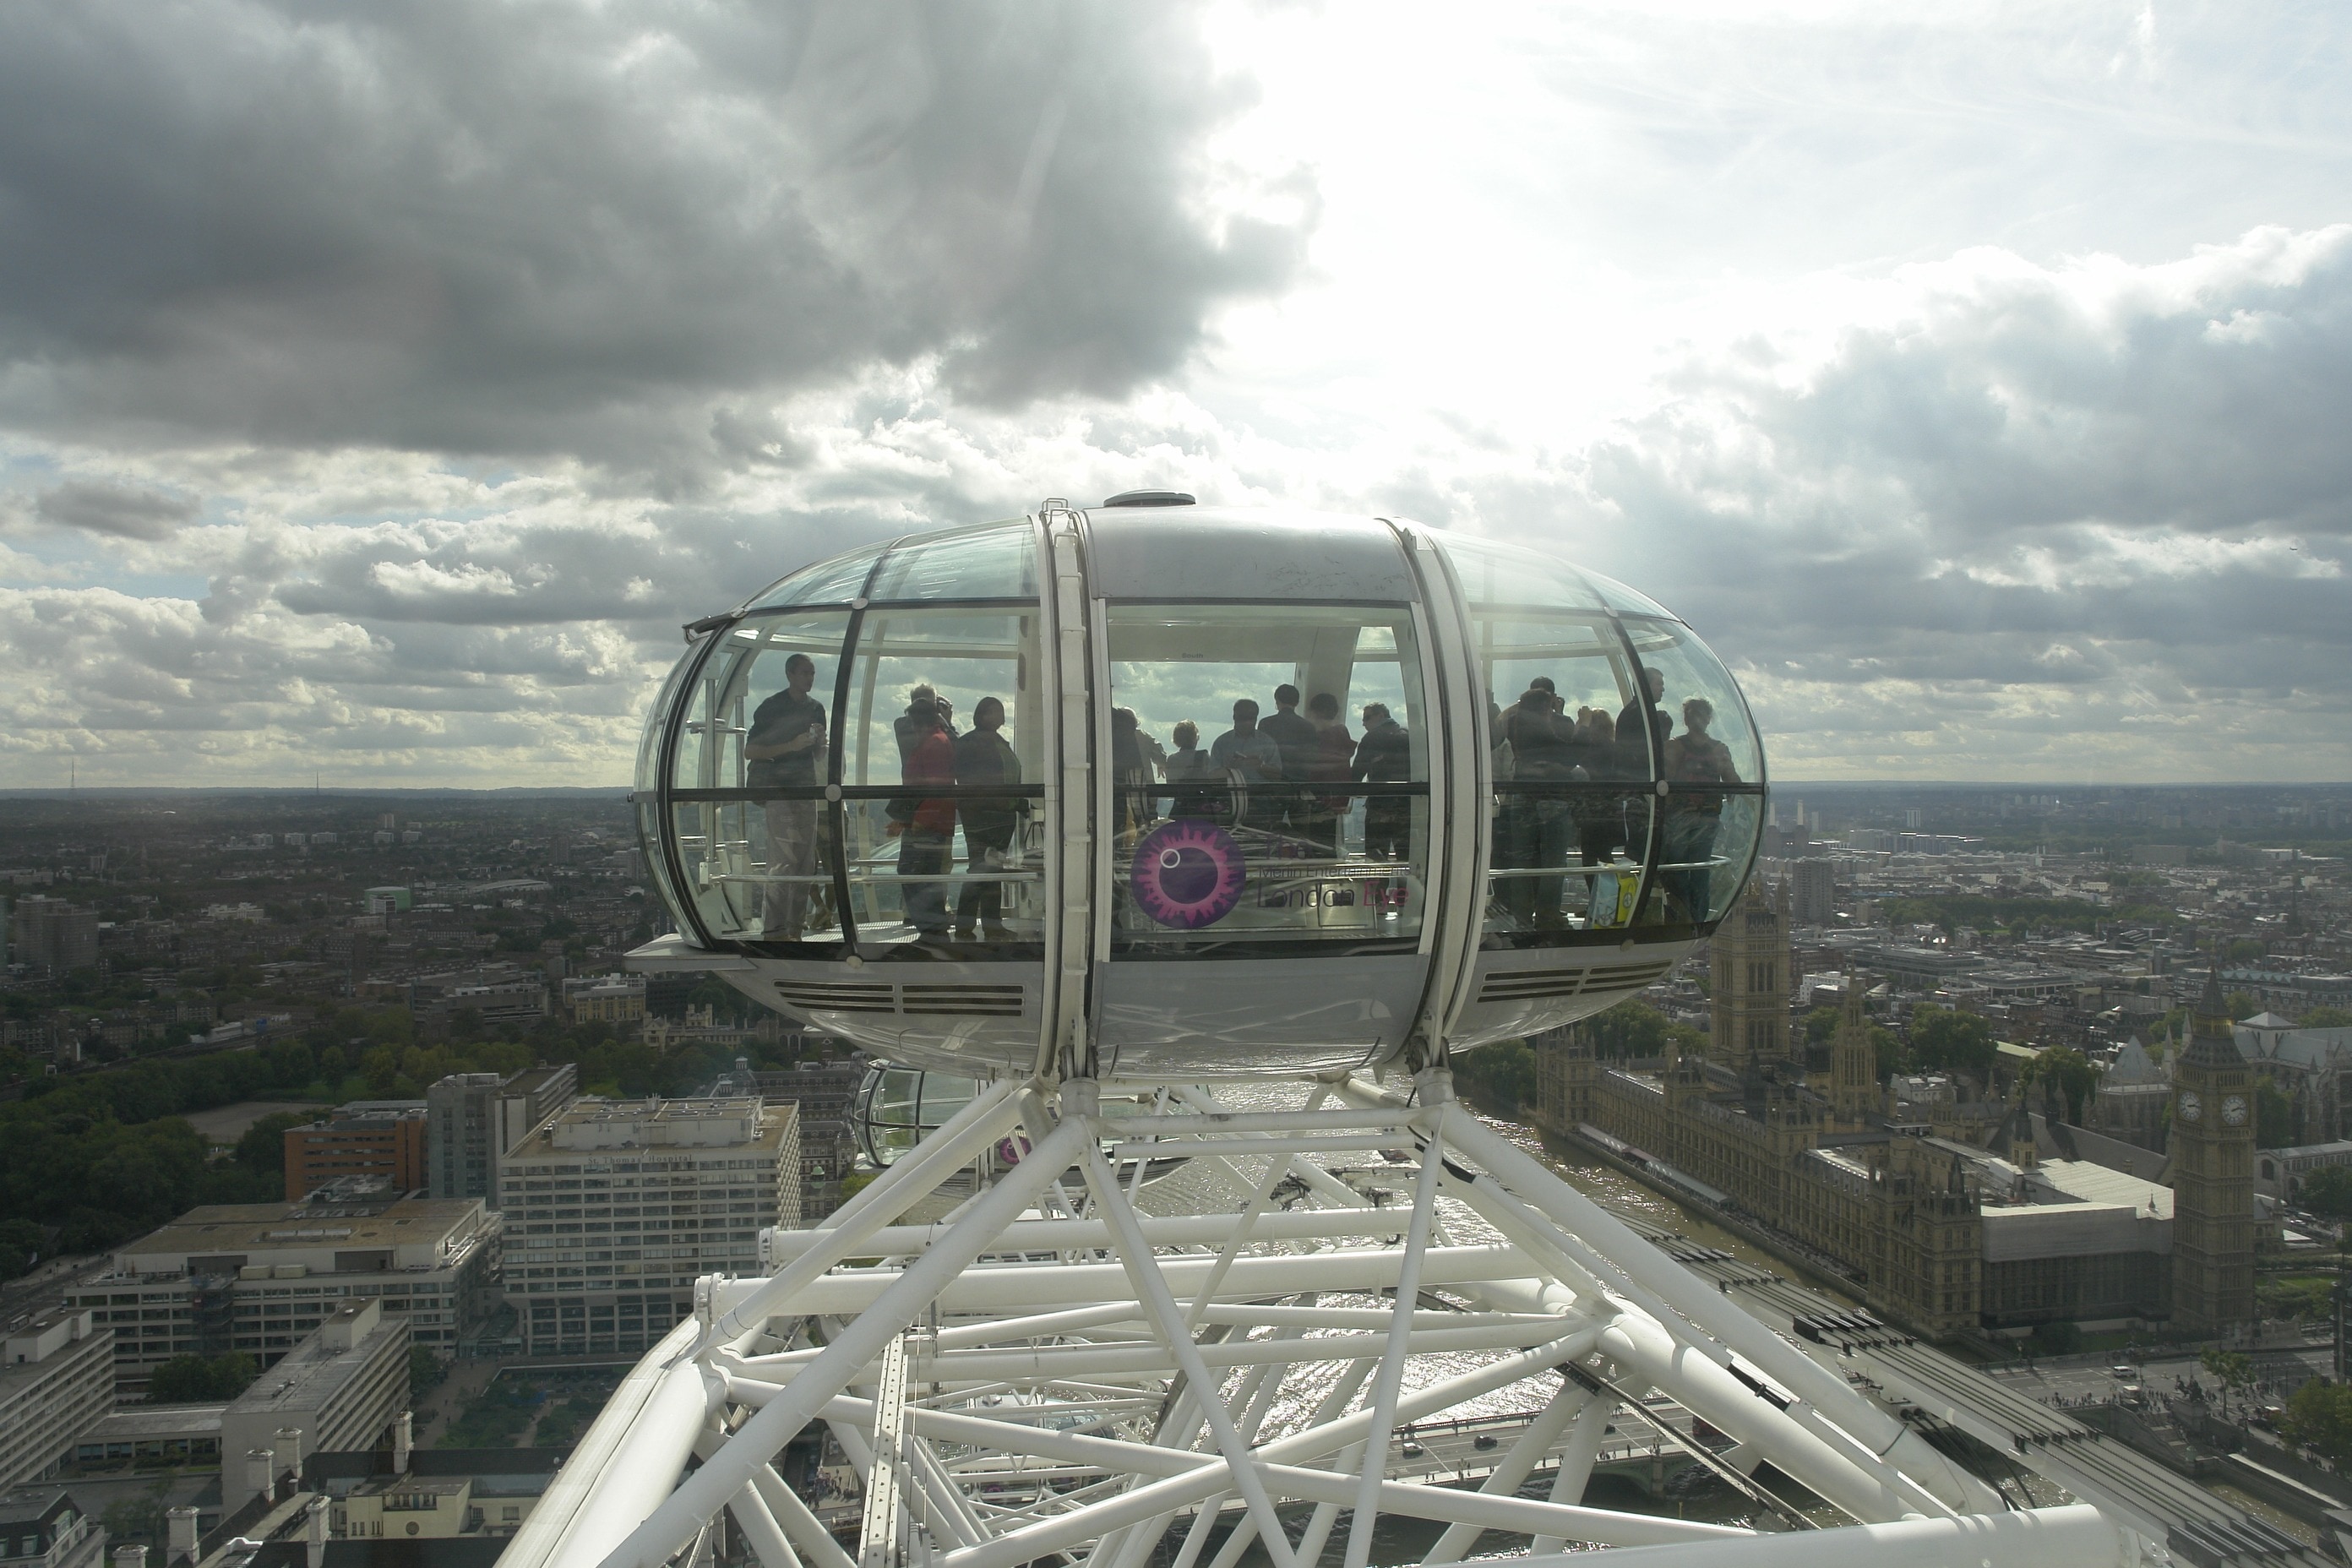 View, The London Eye, Carousel, cloud - sky, sky